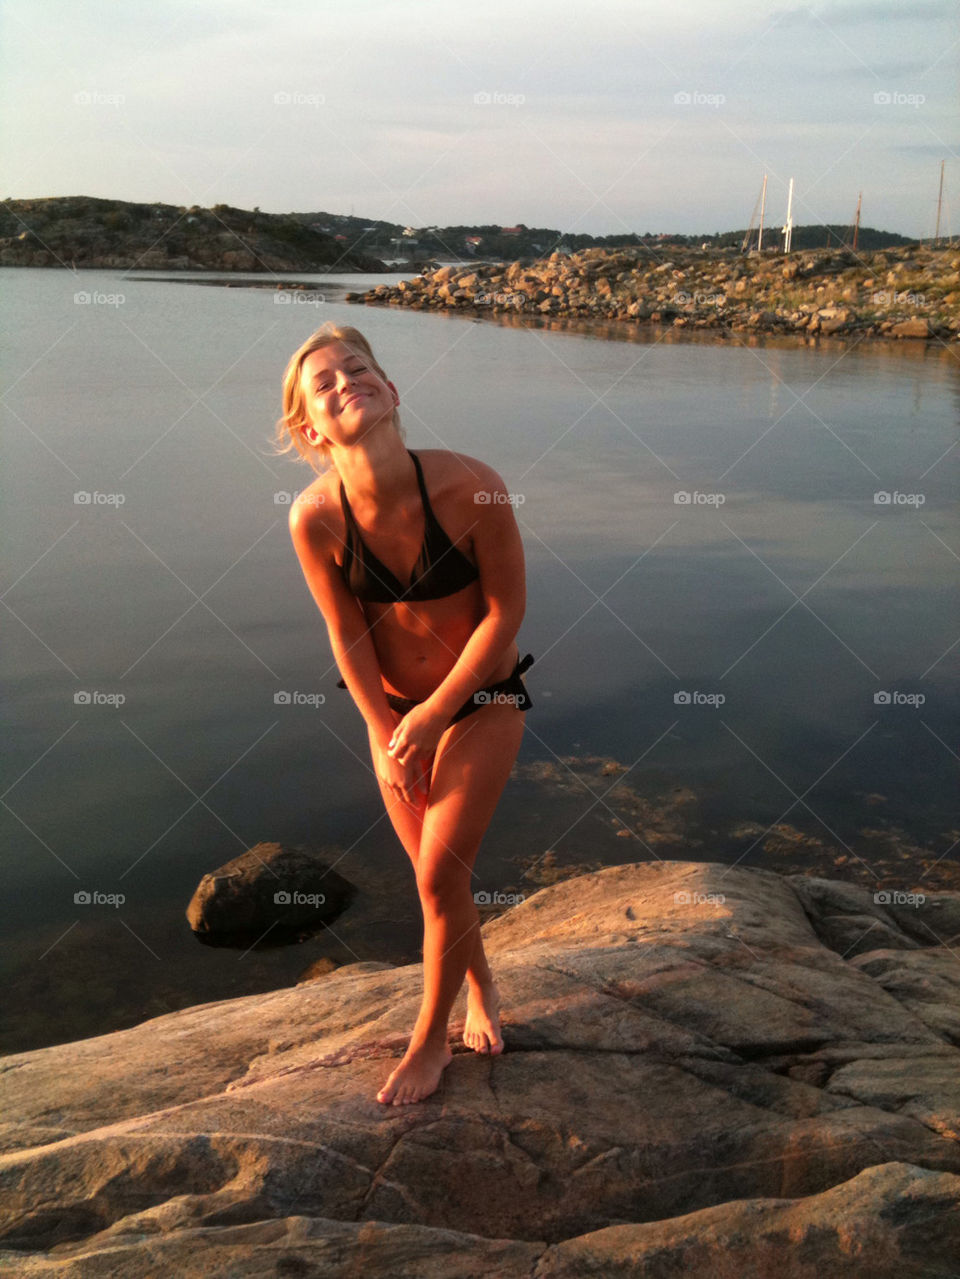 ocean sweden girl happy by annabillger